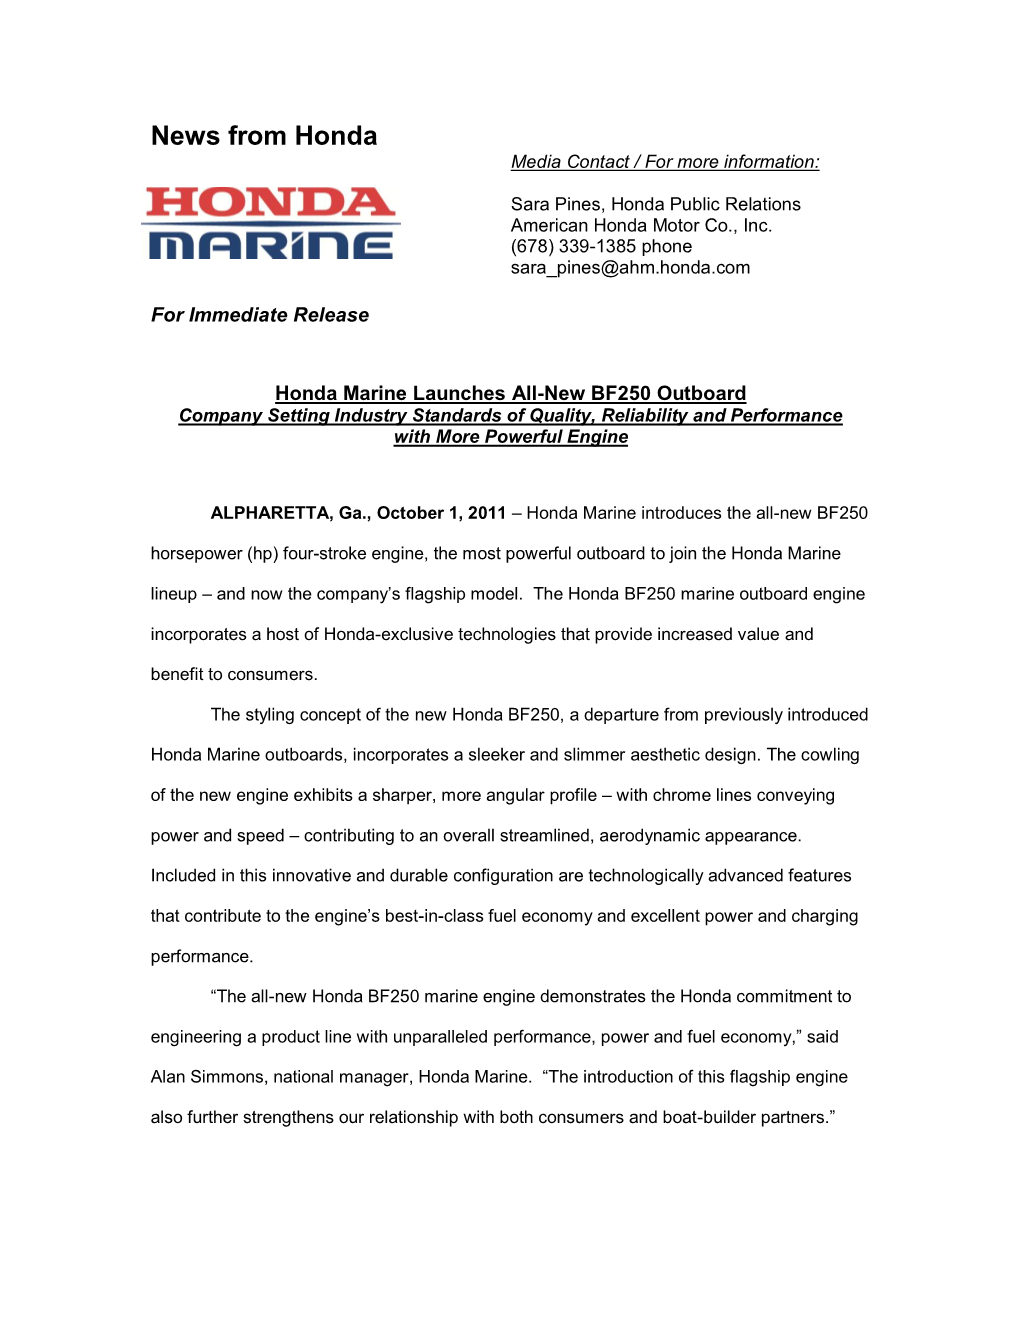 Honda Power Equipment, a Division of American Honda Motor Co